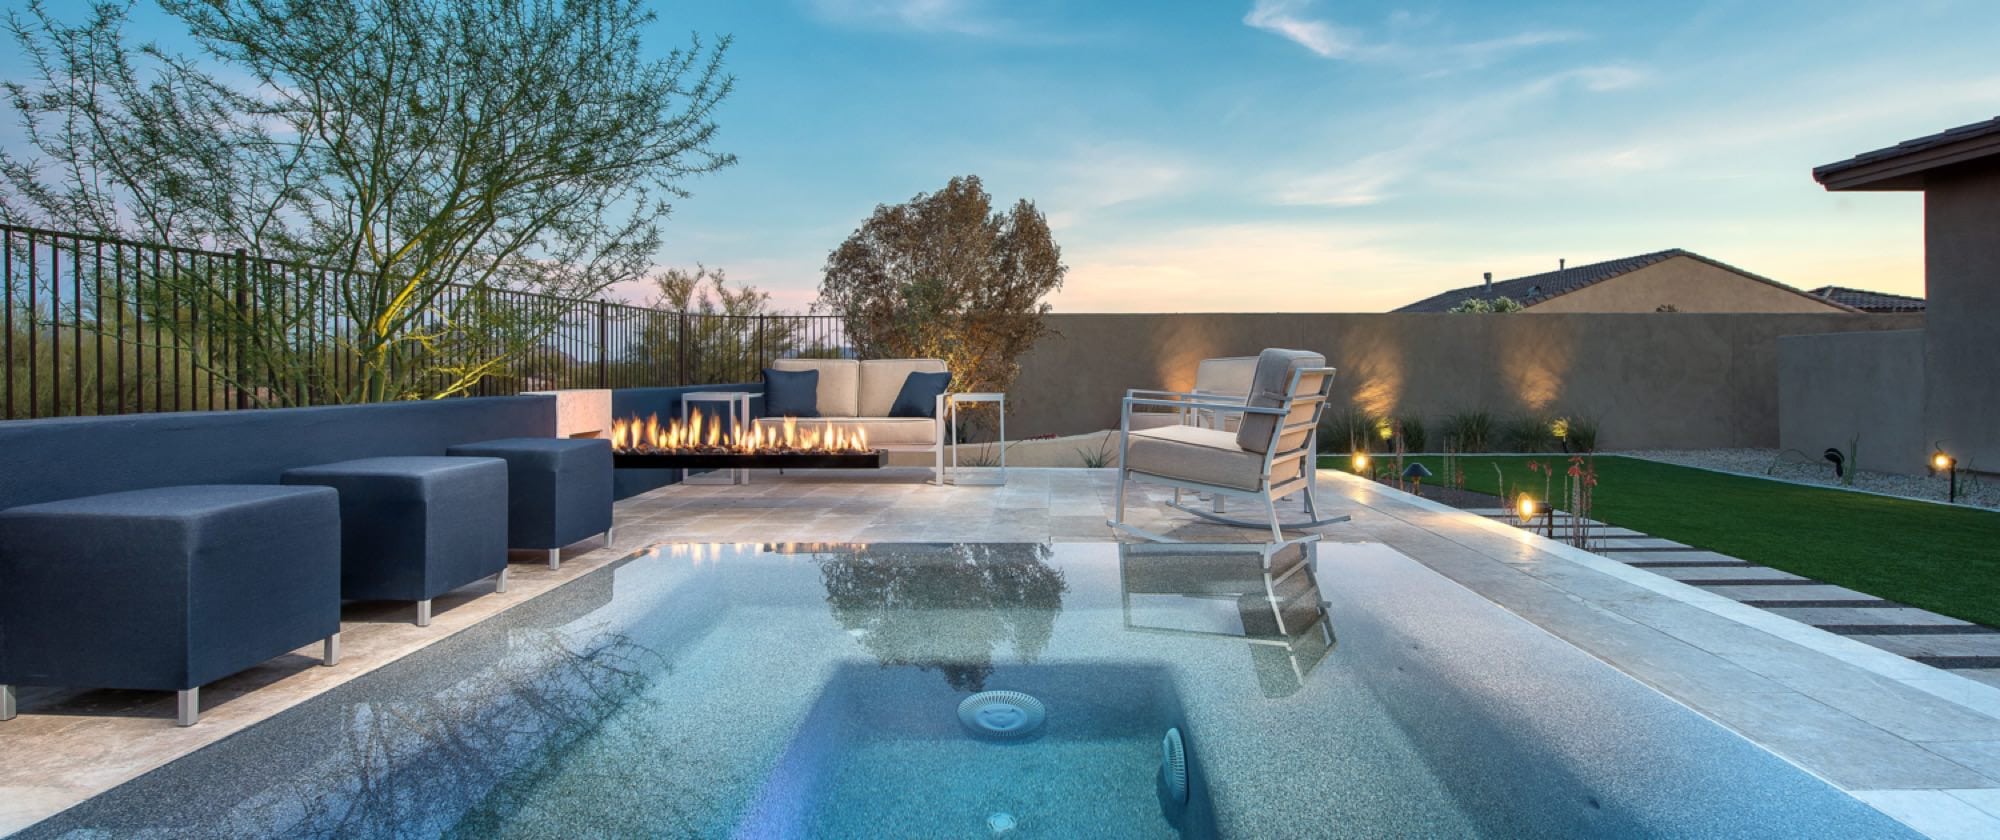 vanishing edge spa bocce court design custom pool builder arizona premier paradise inc 3 watermarked